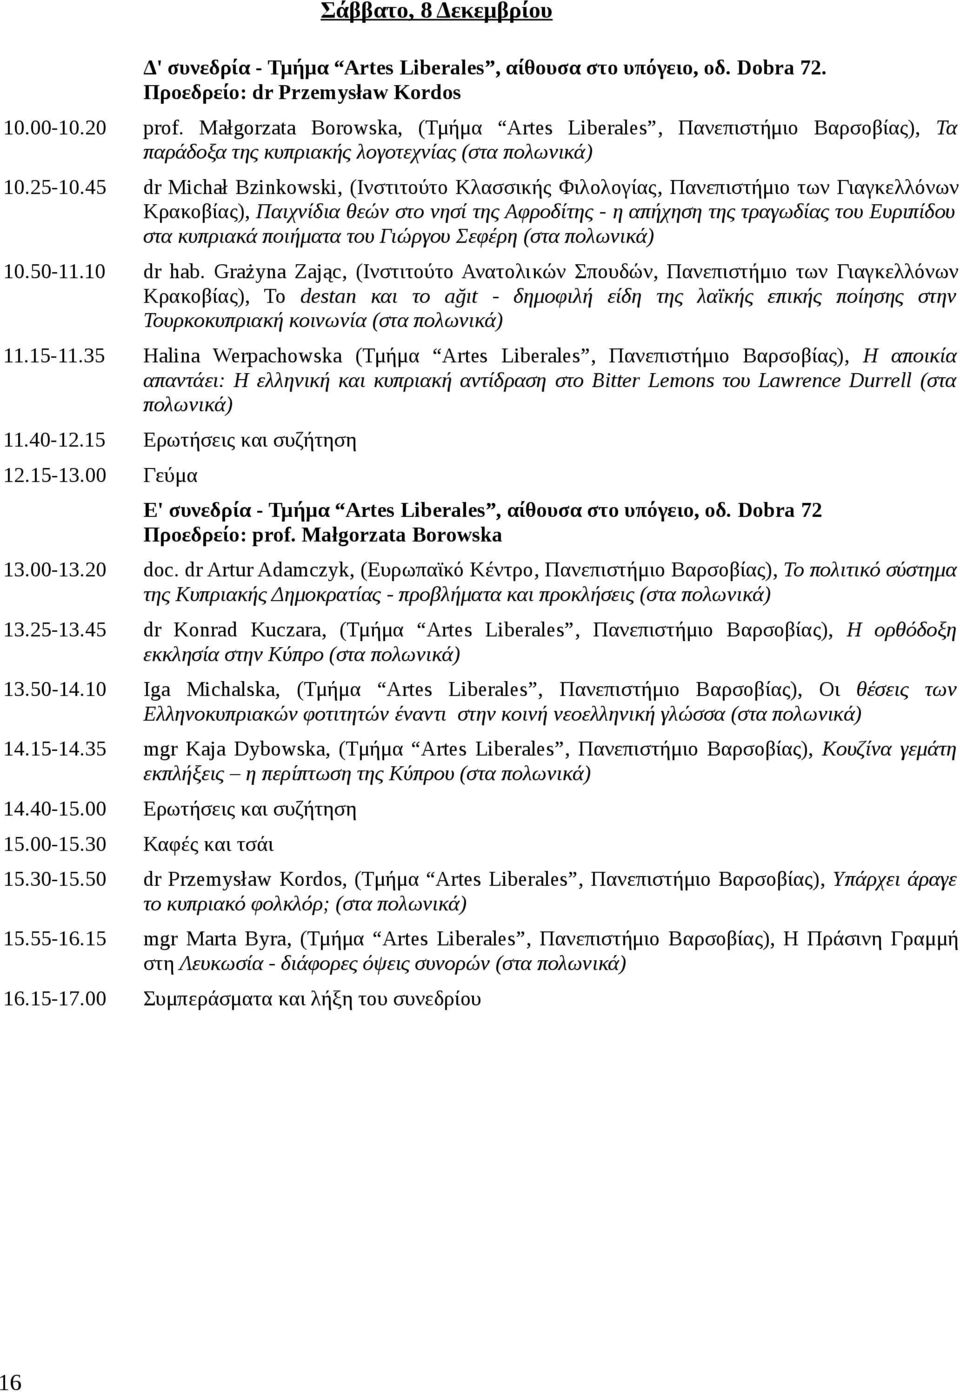 45 dr Michał Bzinkowski, (Ινστιτούτο Κλασσικής Φιλολογίας, Πανεπιστήμιο των Γιαγκελλόνων Κρακοβίας), Παιχνίδια θεών στο νησί της Αφροδίτης - η απήχηση της τραγωδίας του Ευριπίδου στα κυπριακά